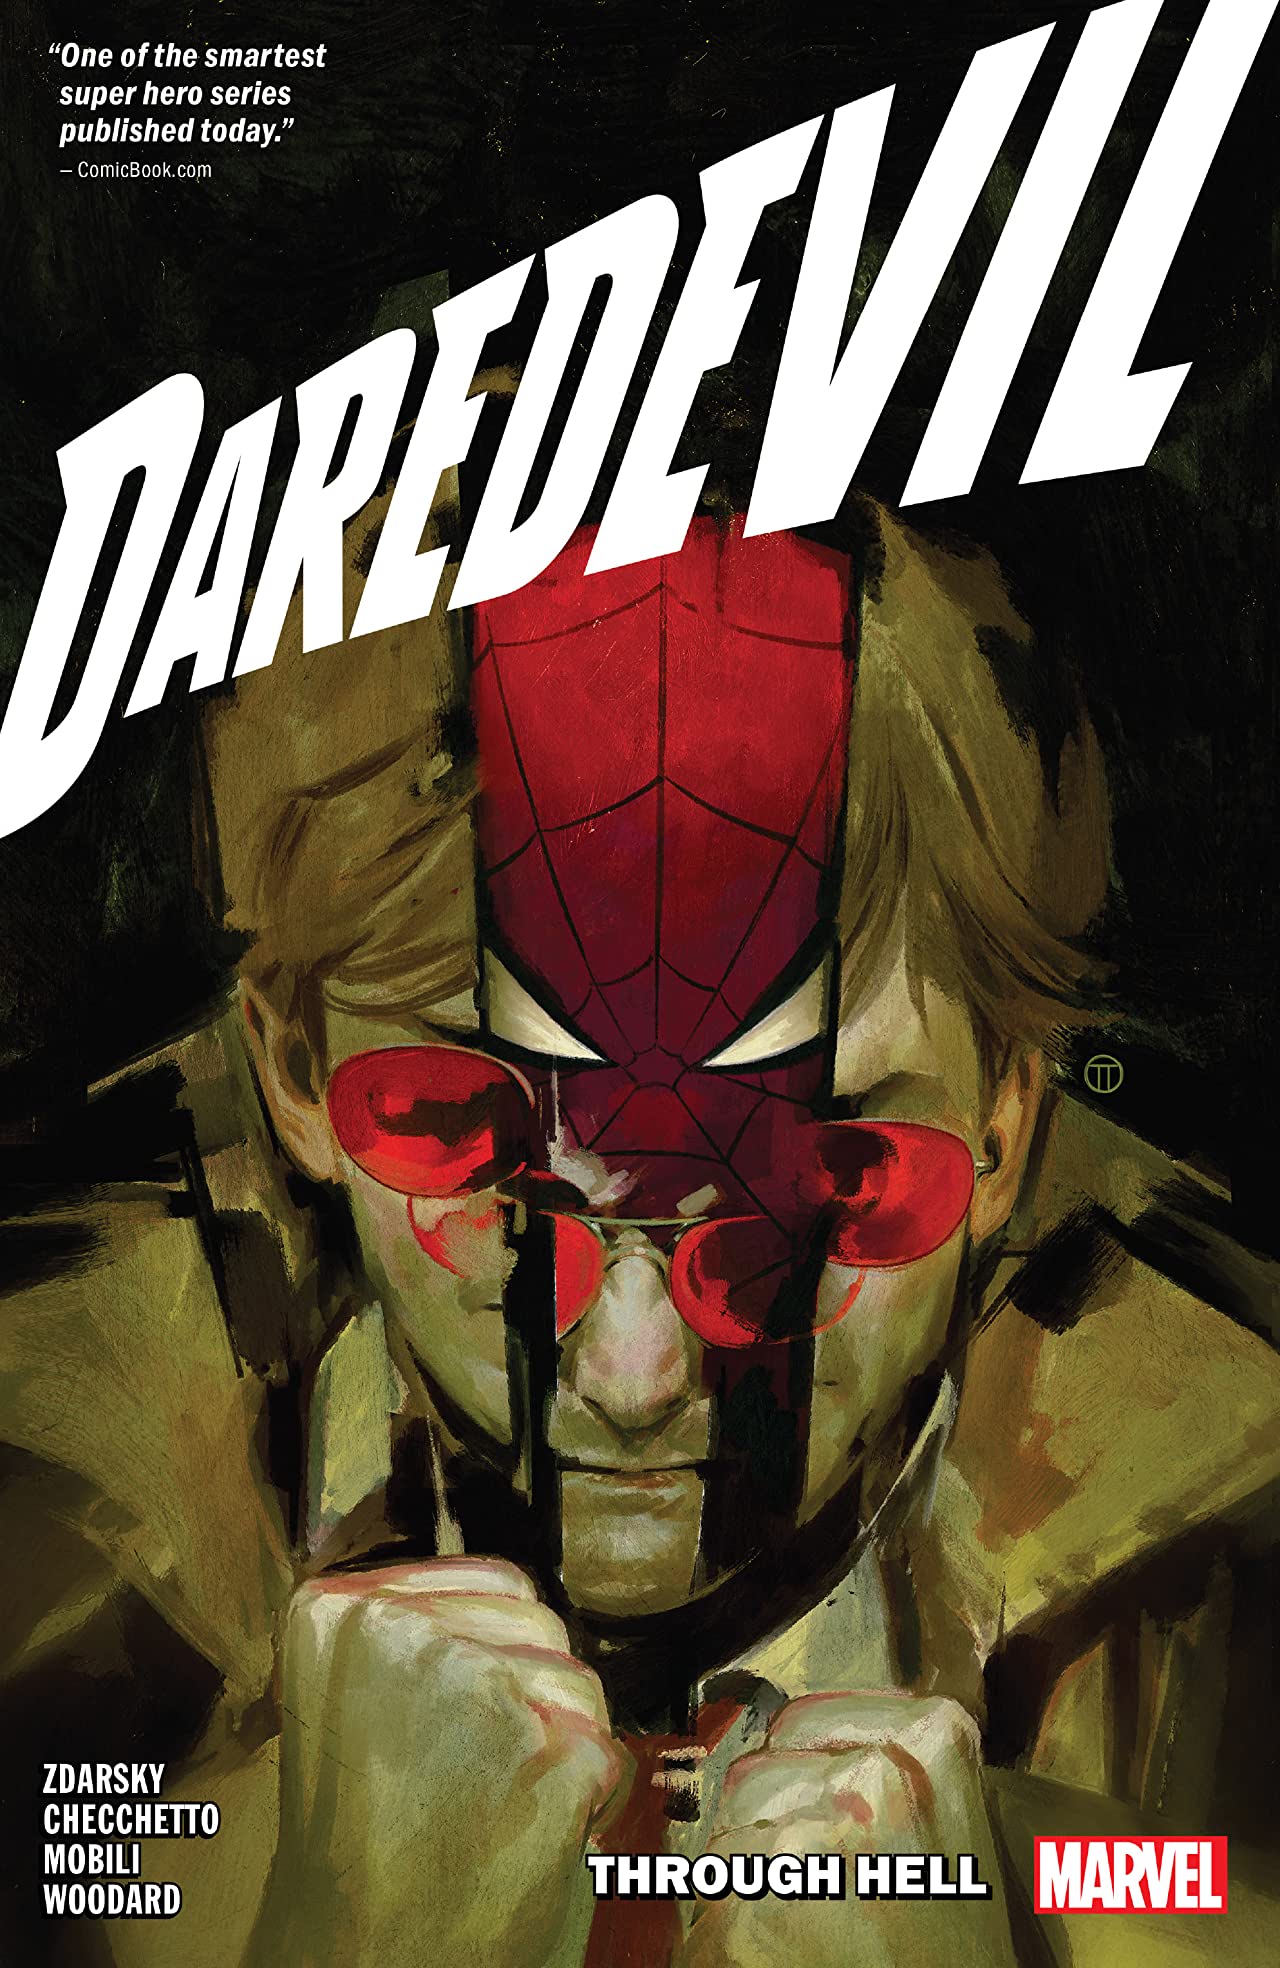 Daredevil By Chip Zdarsky Vol. 3: Through Hell (Trade Paperback)